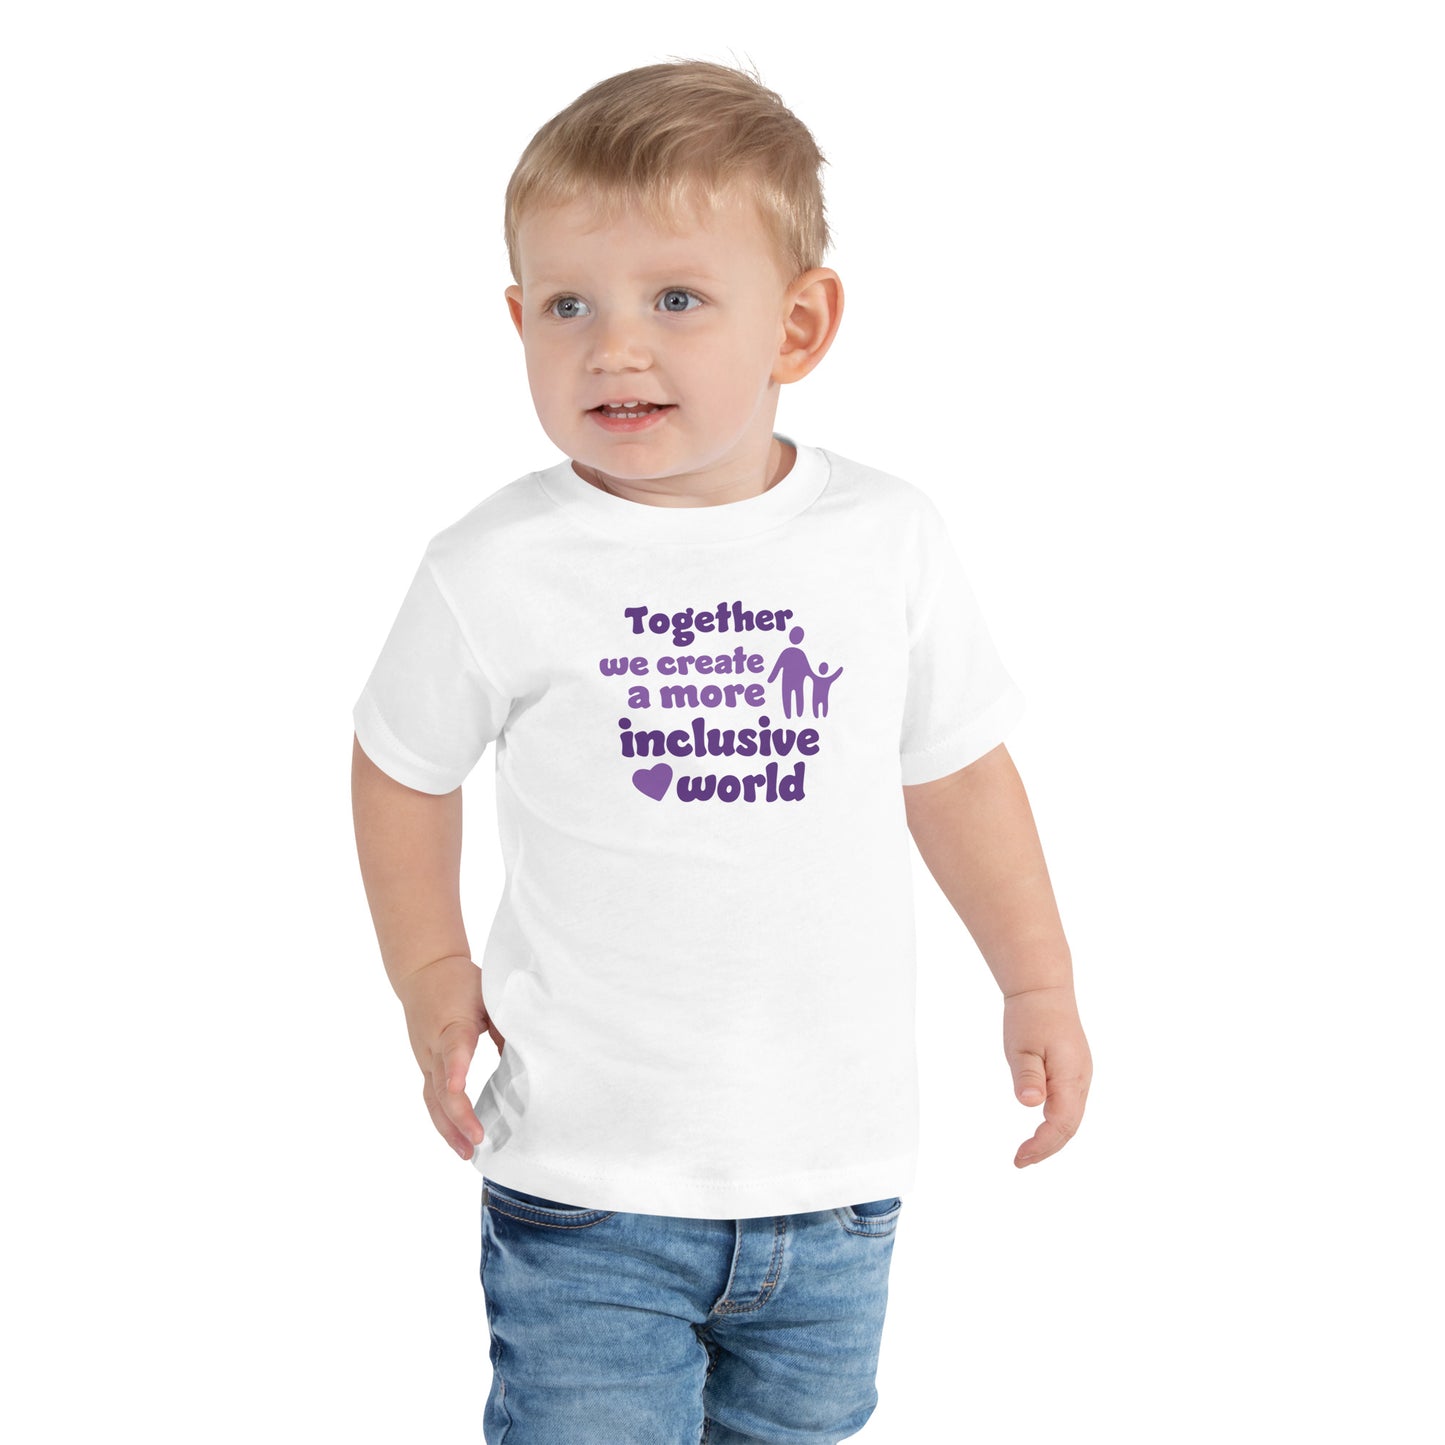 Inclusive World Toddler Short Sleeve Tee